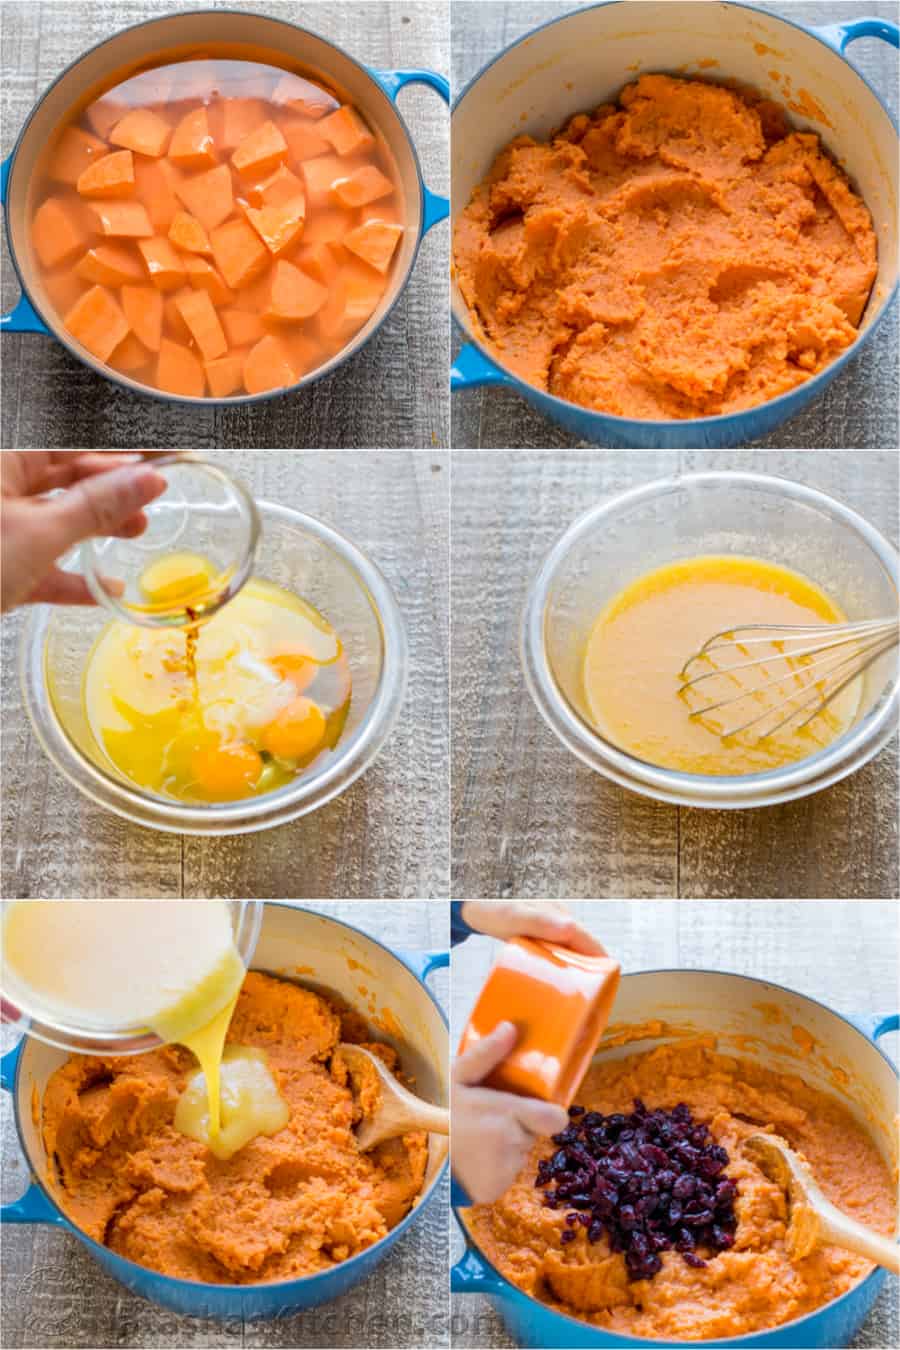 How to Make Sweet potato casserole step by step photos